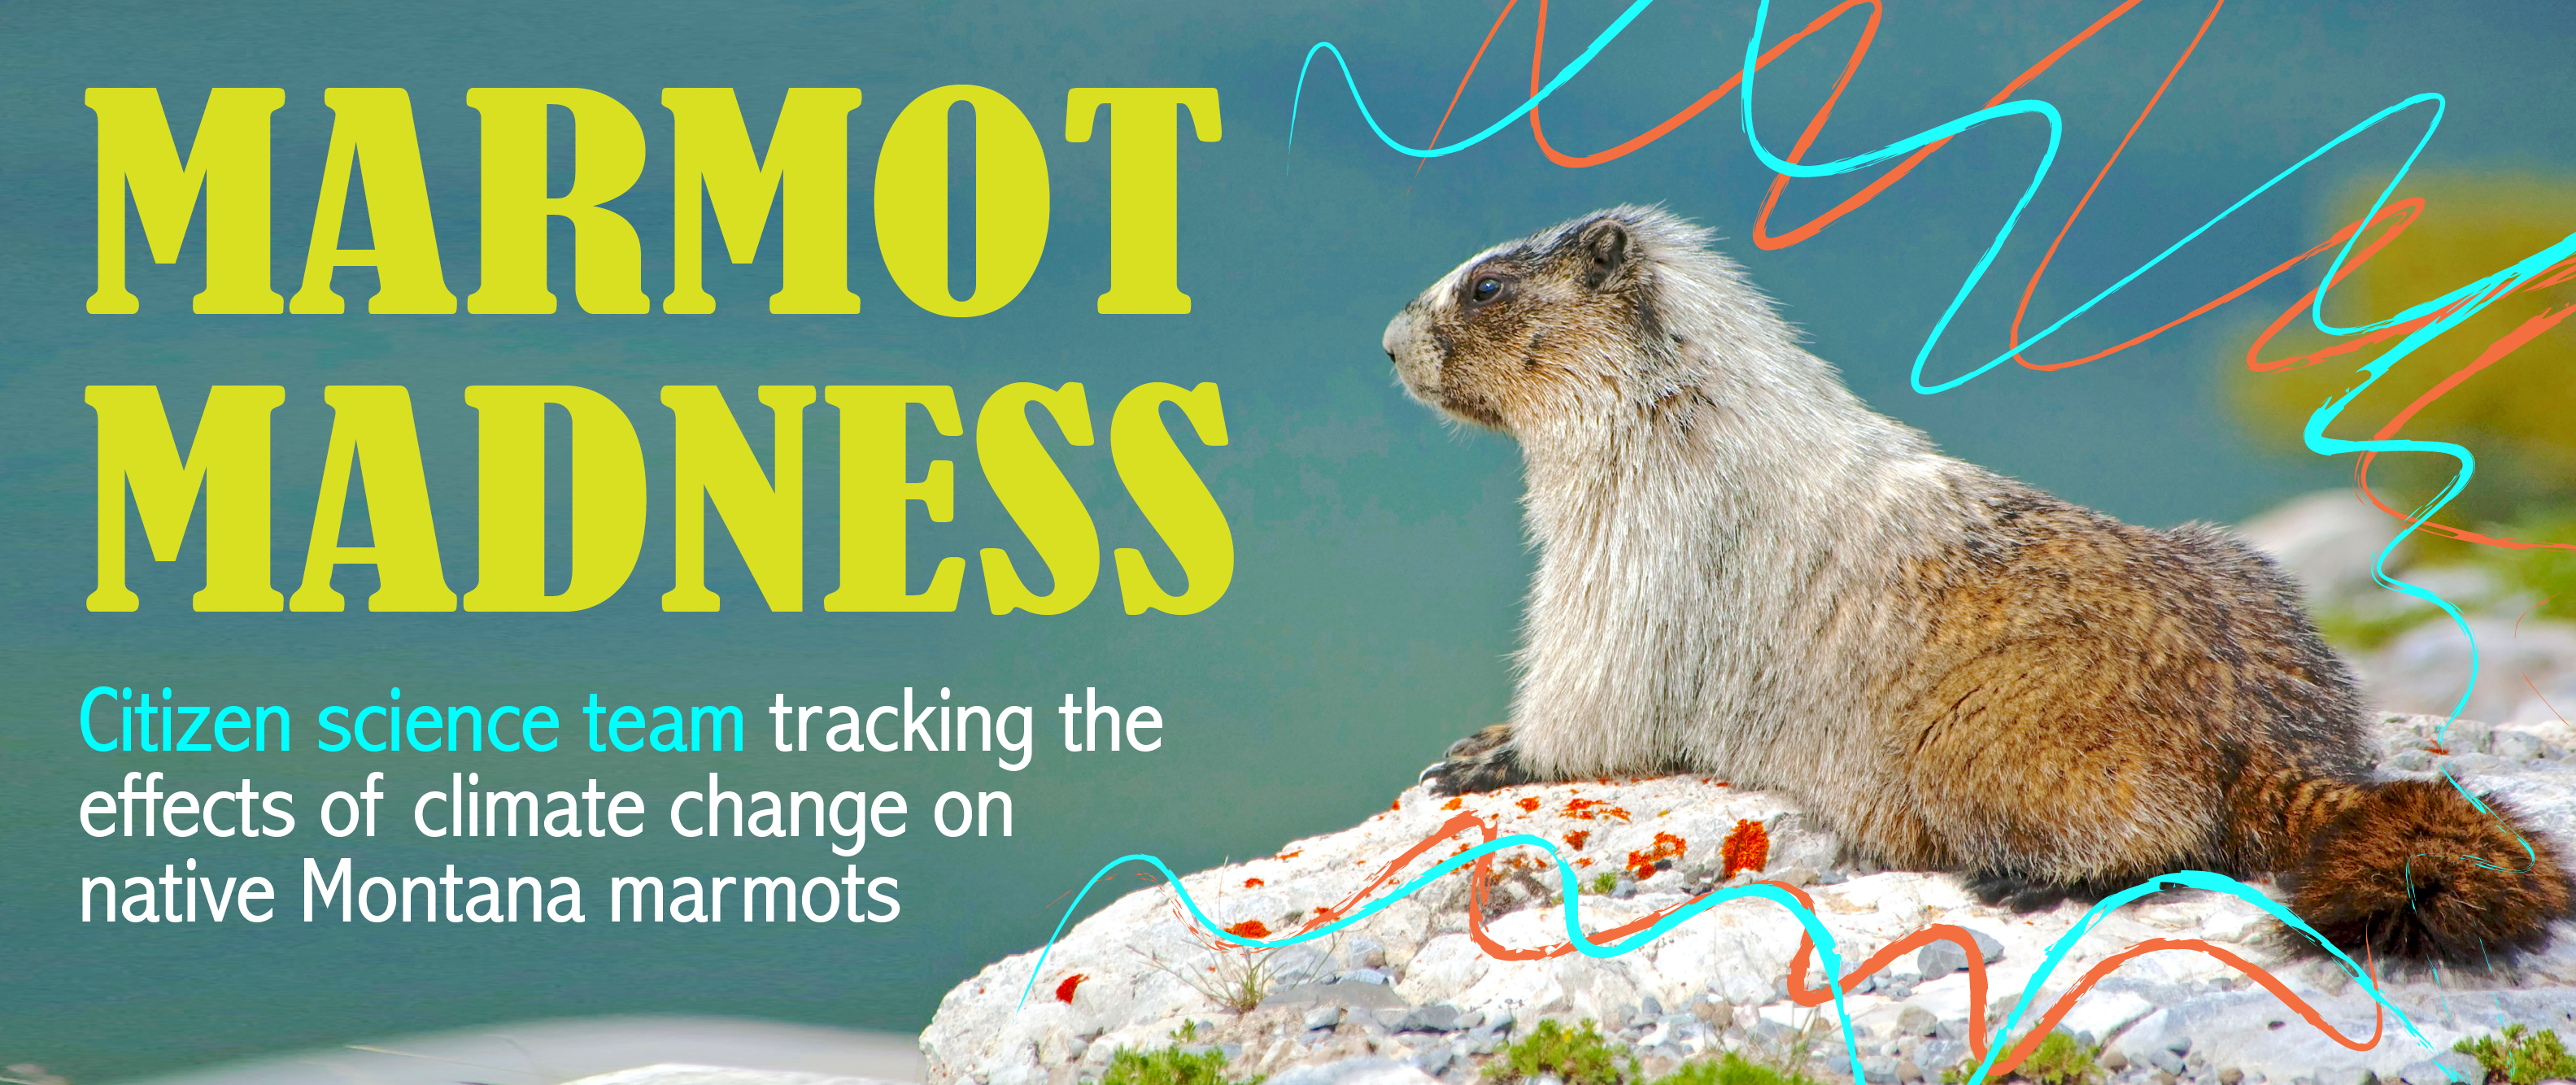 Marmot Madness banner